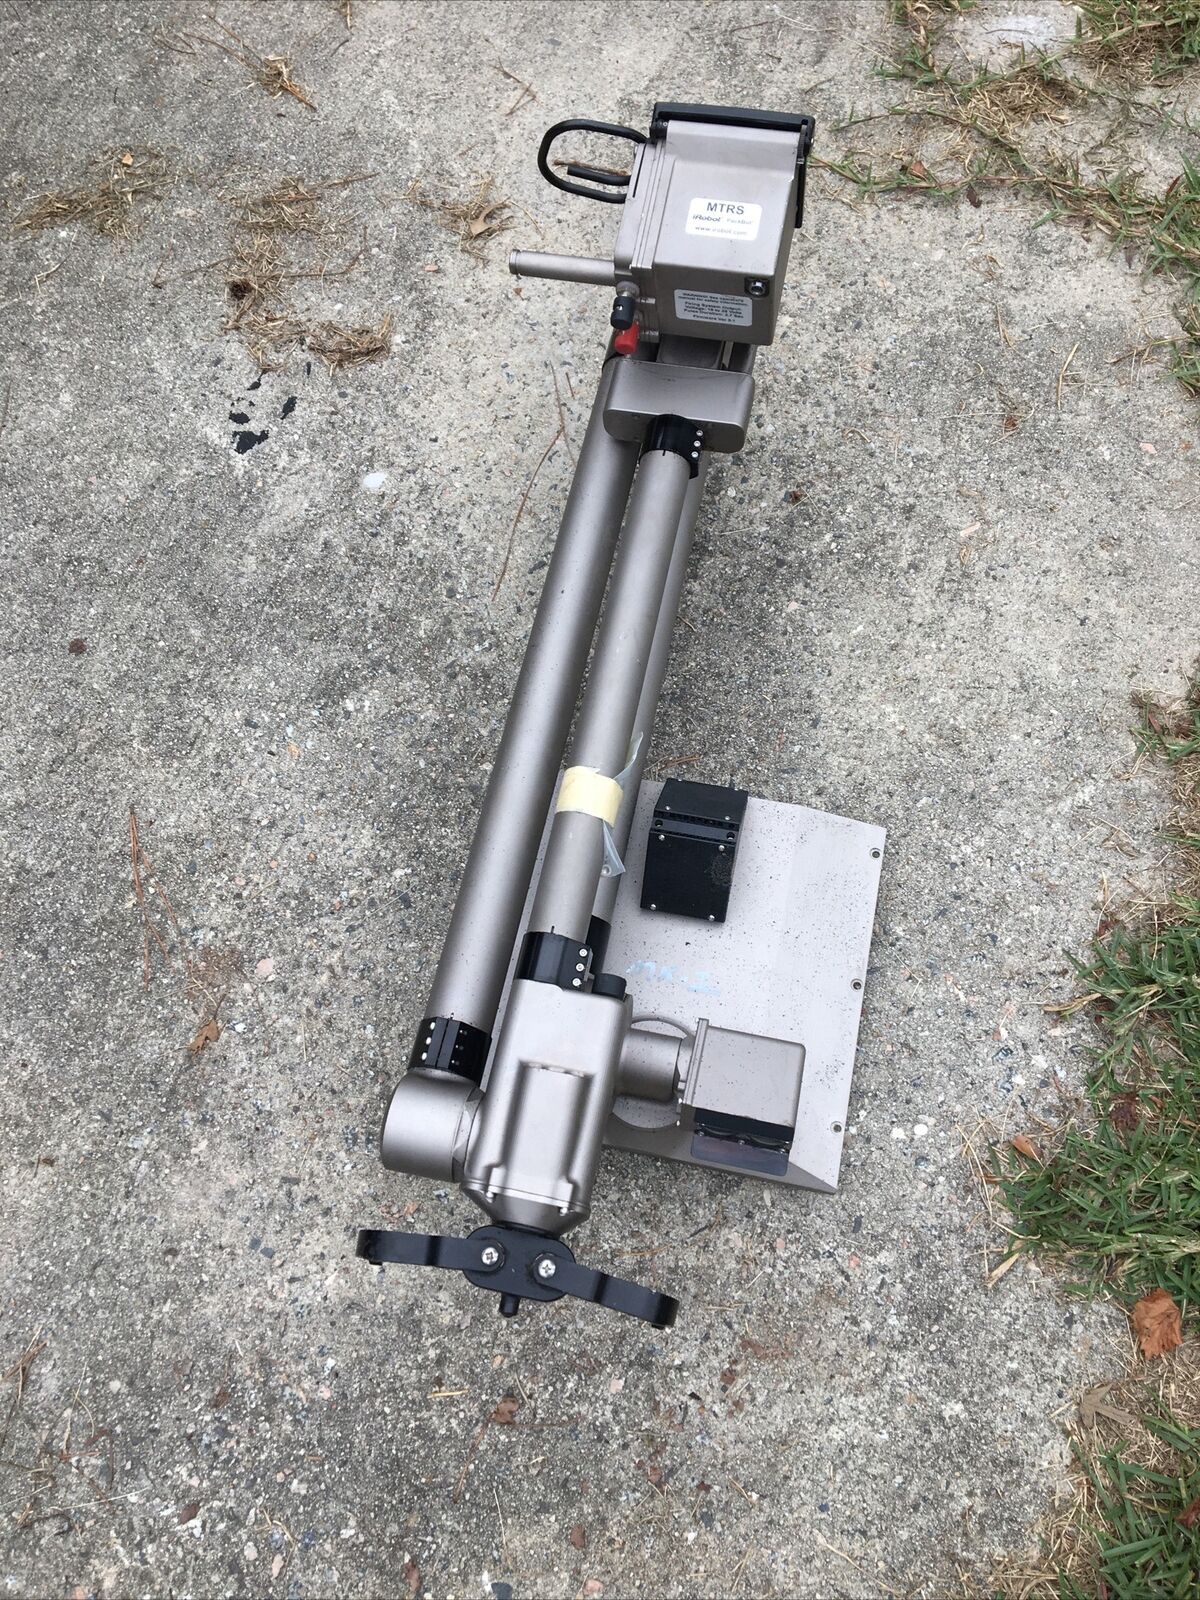 iRobot 510 PACKBOT MK-1 Robot Gripping Arm w/ Cameras..Free Shipping